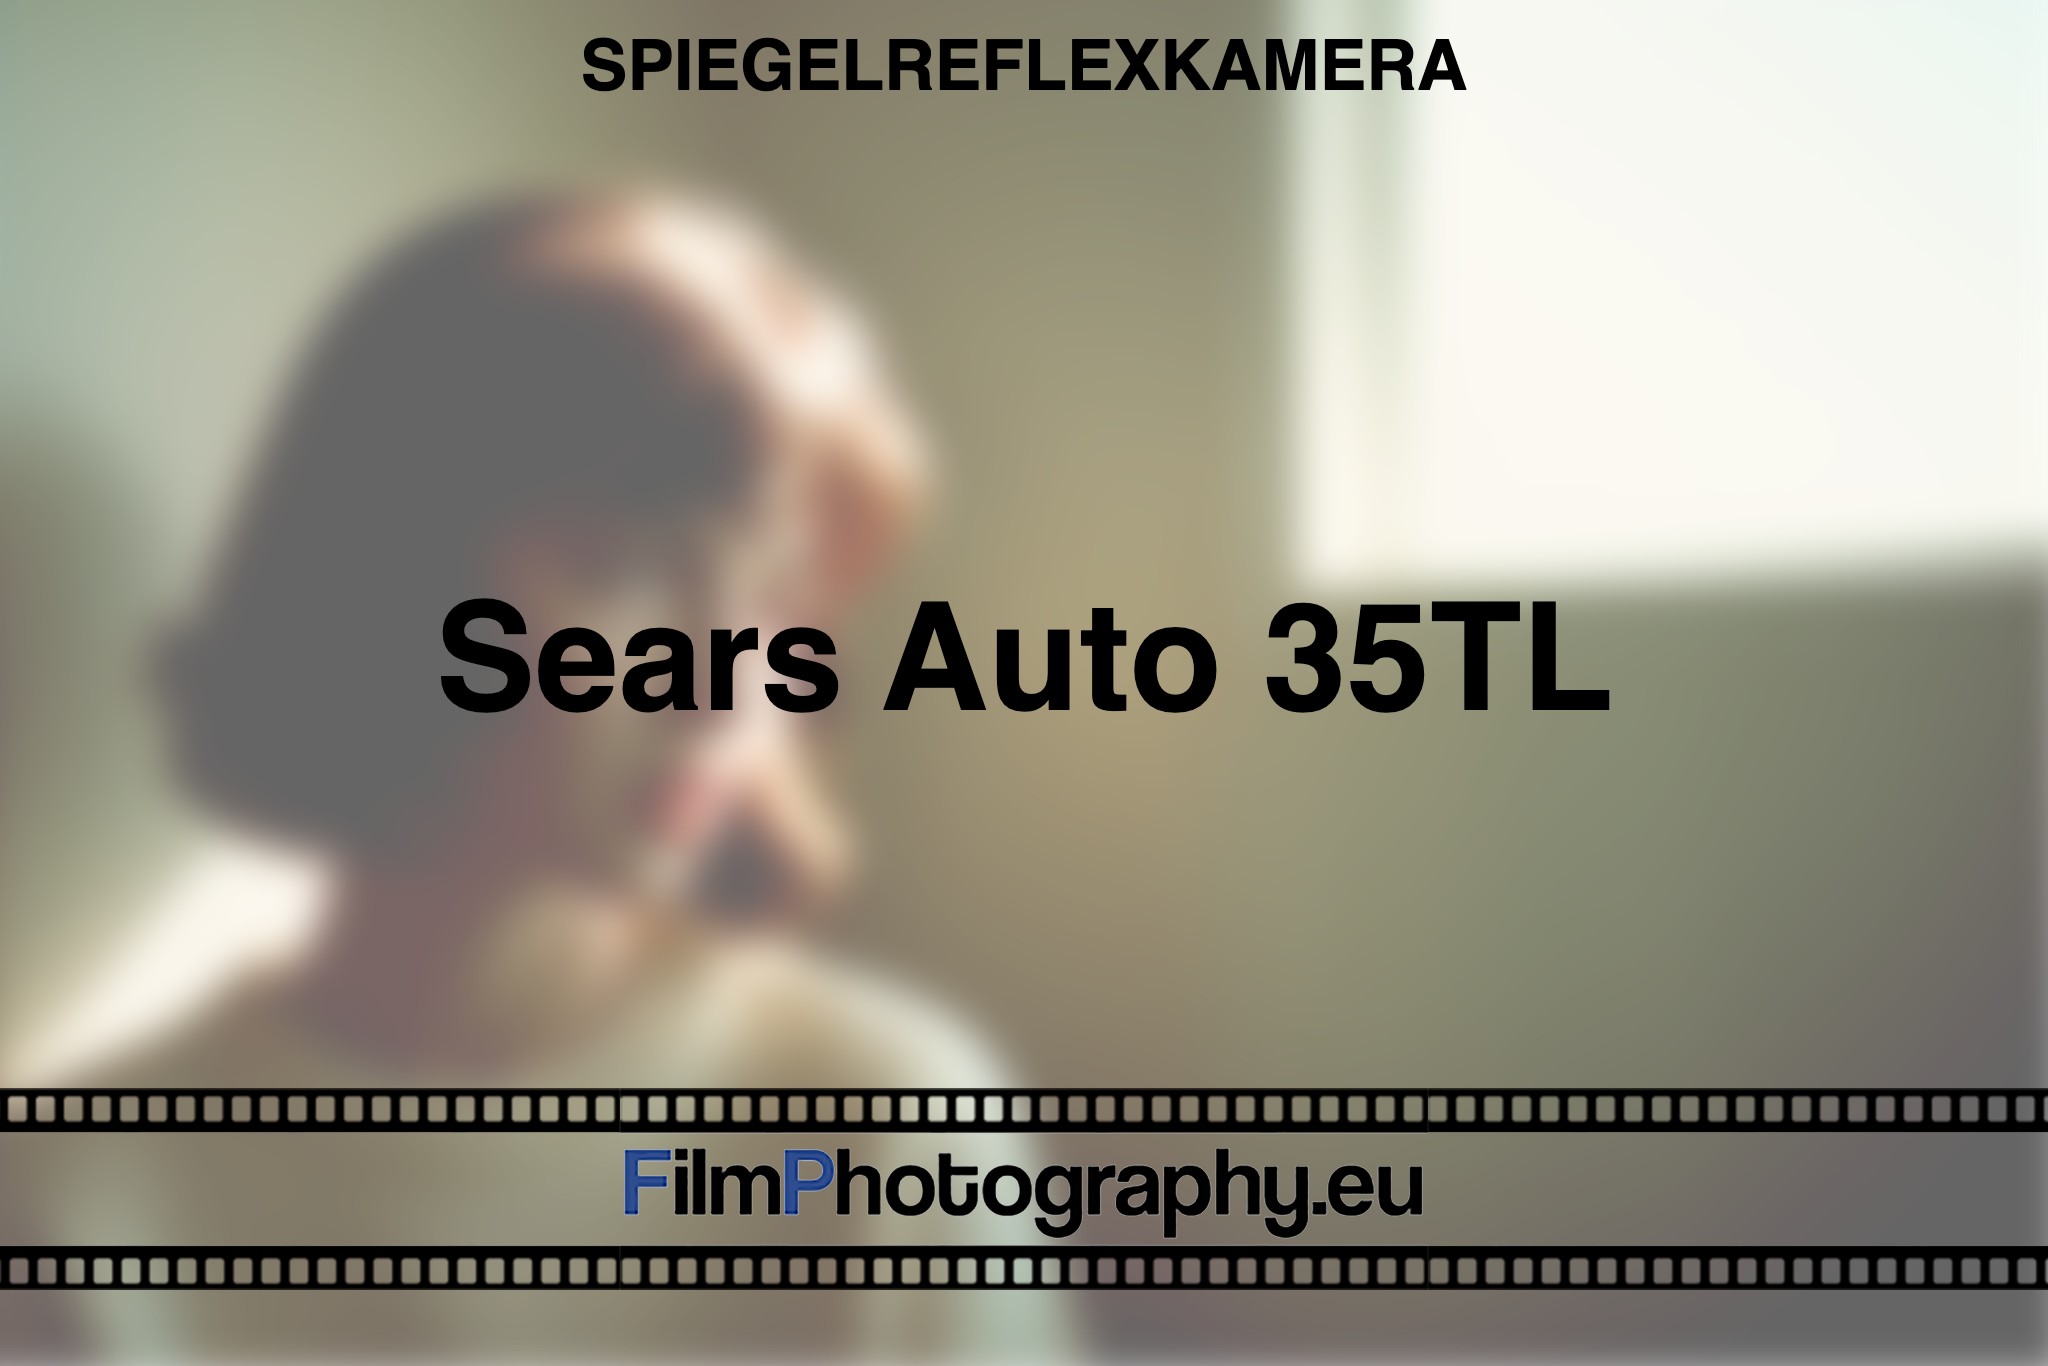 sears-auto-35tl-spiegelreflexkamera-bnv